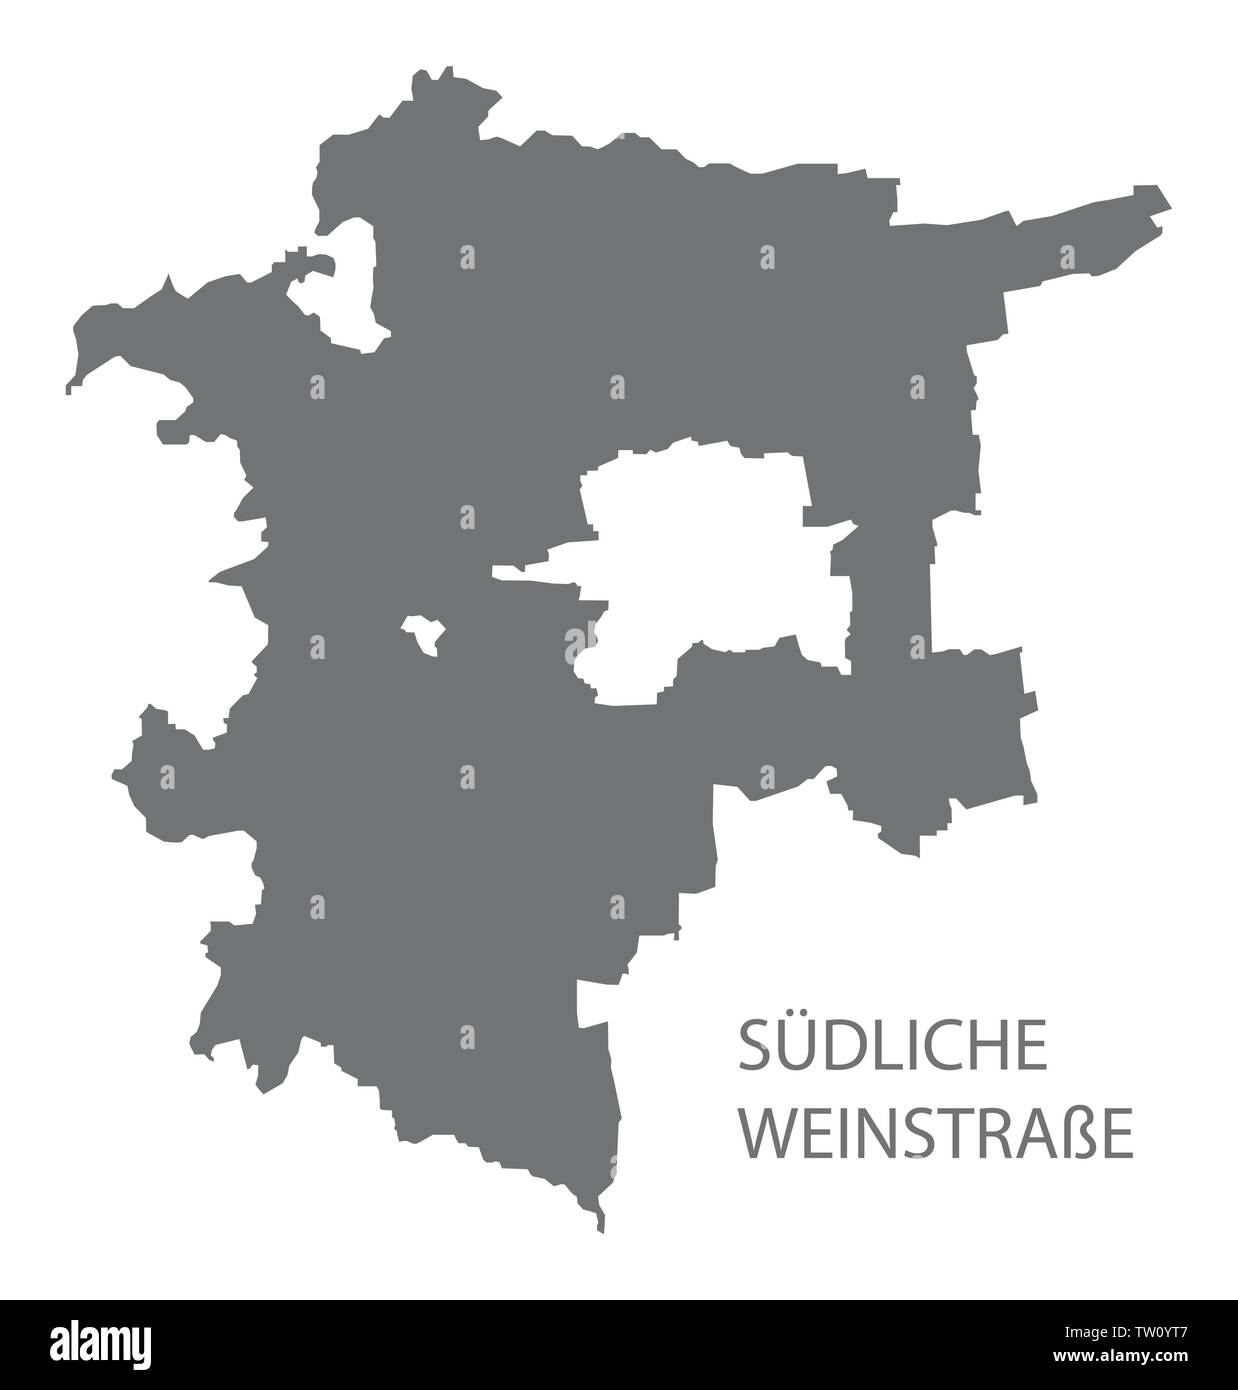 Suedliche Weinstrasse grey county map of Rhineland-Palatinate DE Stock Vector